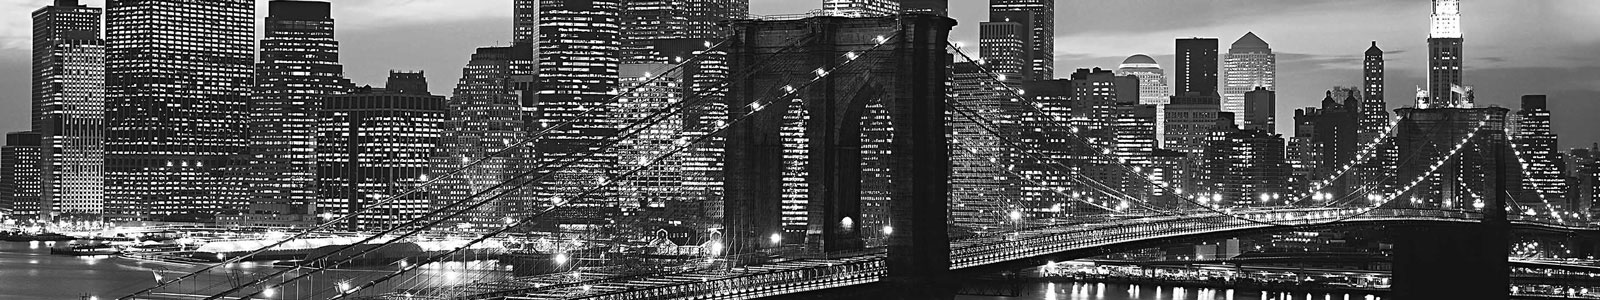 №4161 - Бруклинский мост, Нью-Йорк